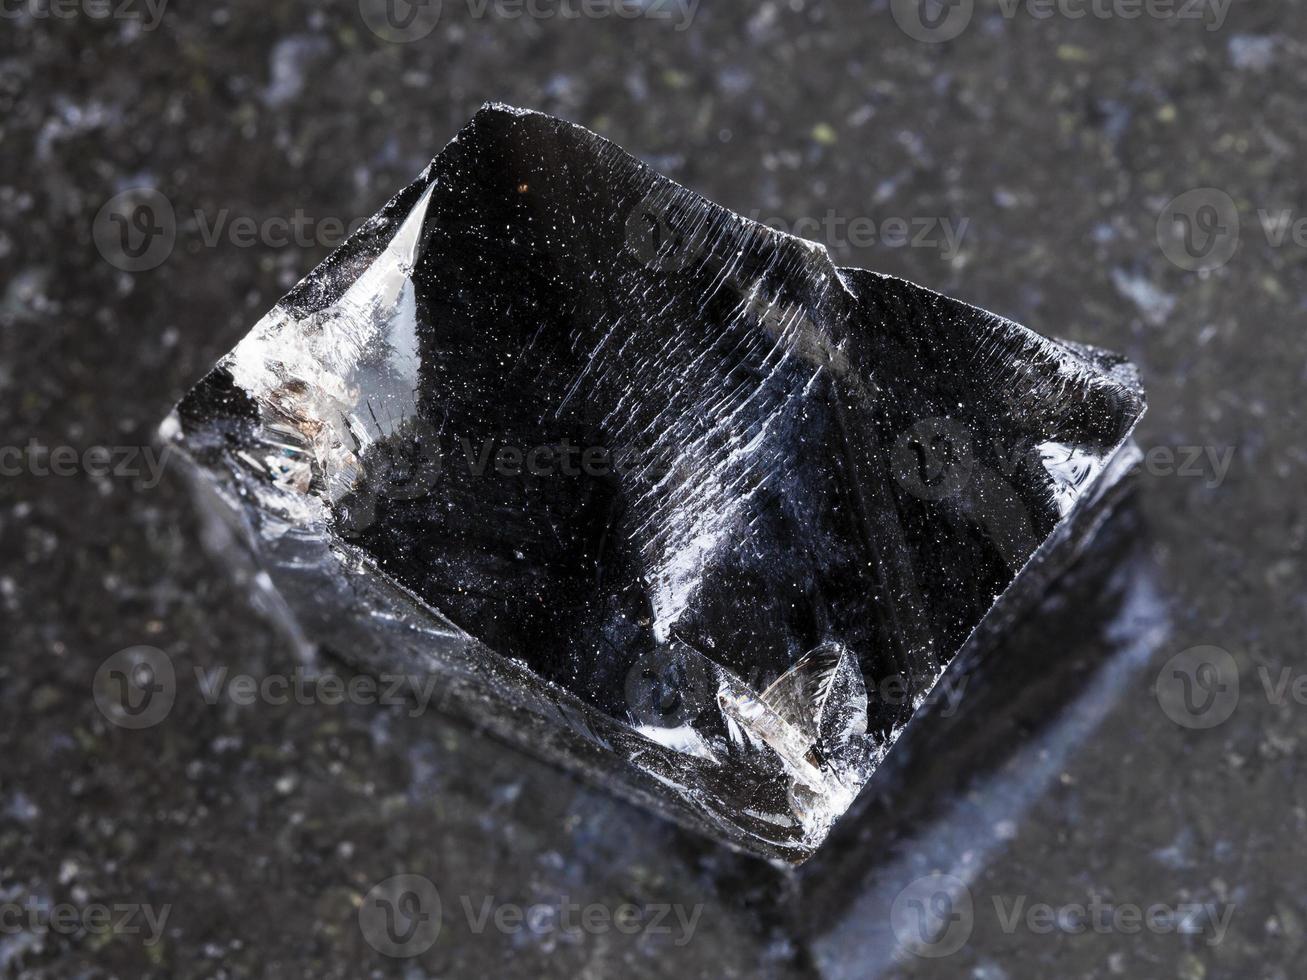 Stück raues Obsidian-Vulkanglas auf Dunkelheit foto